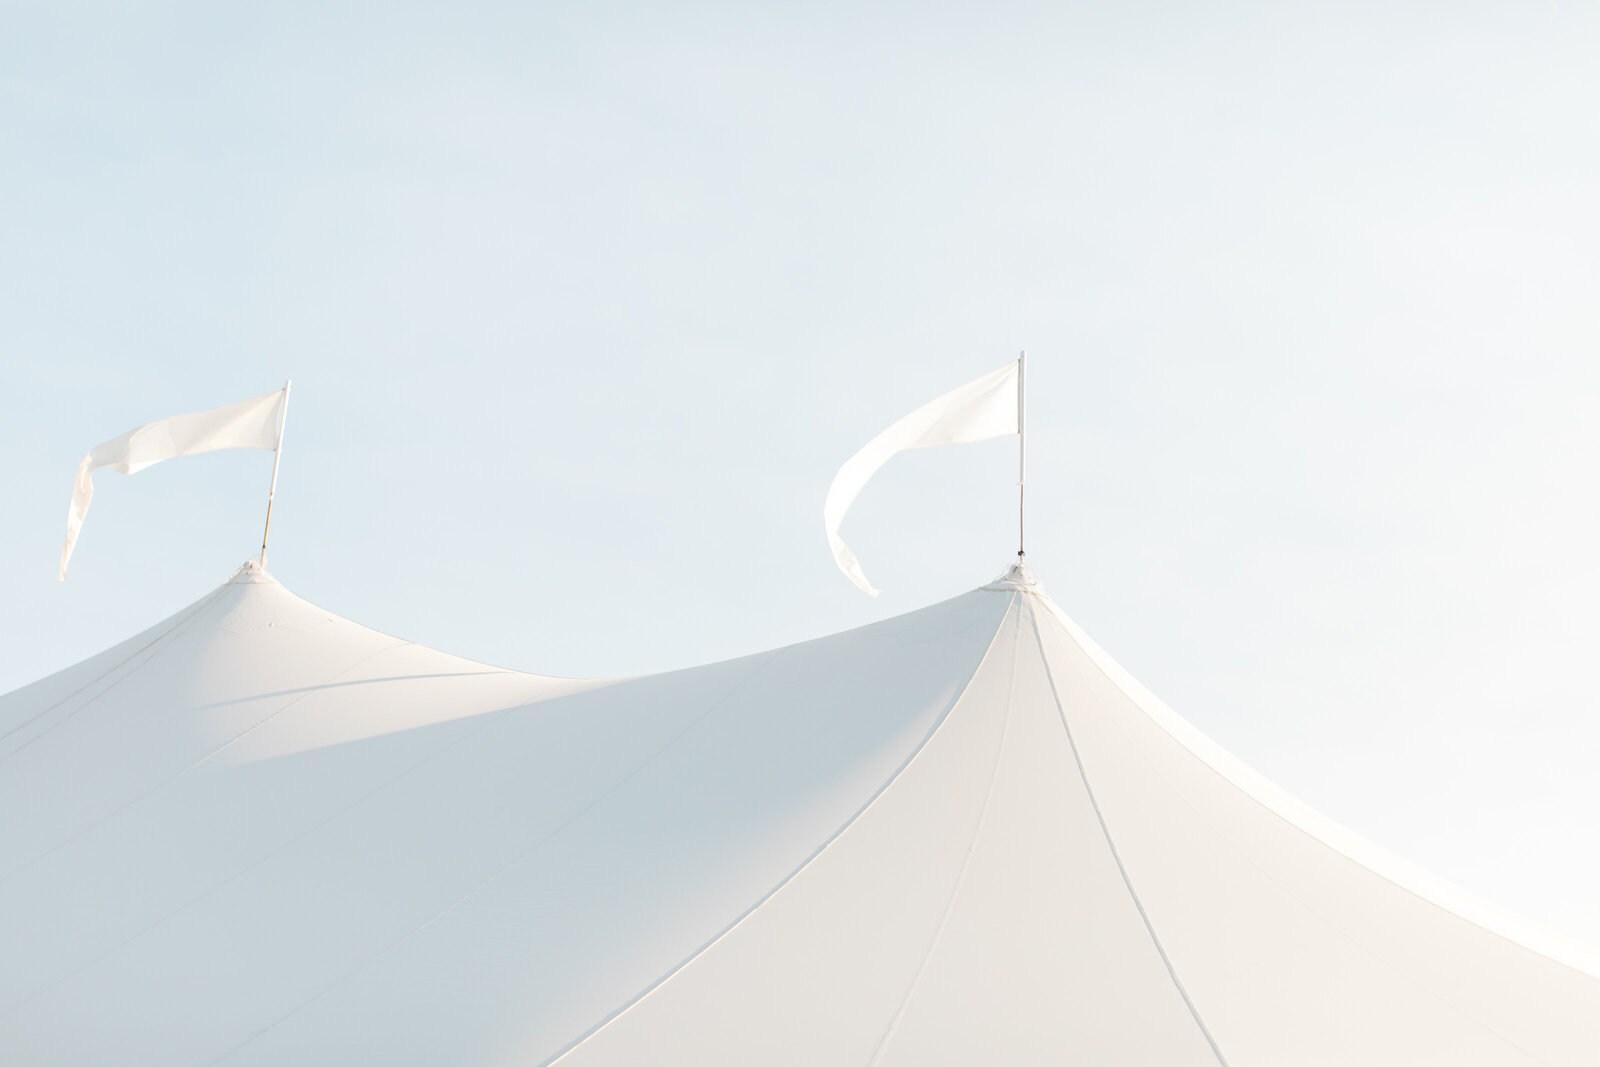 white reception tents against a light blue sky